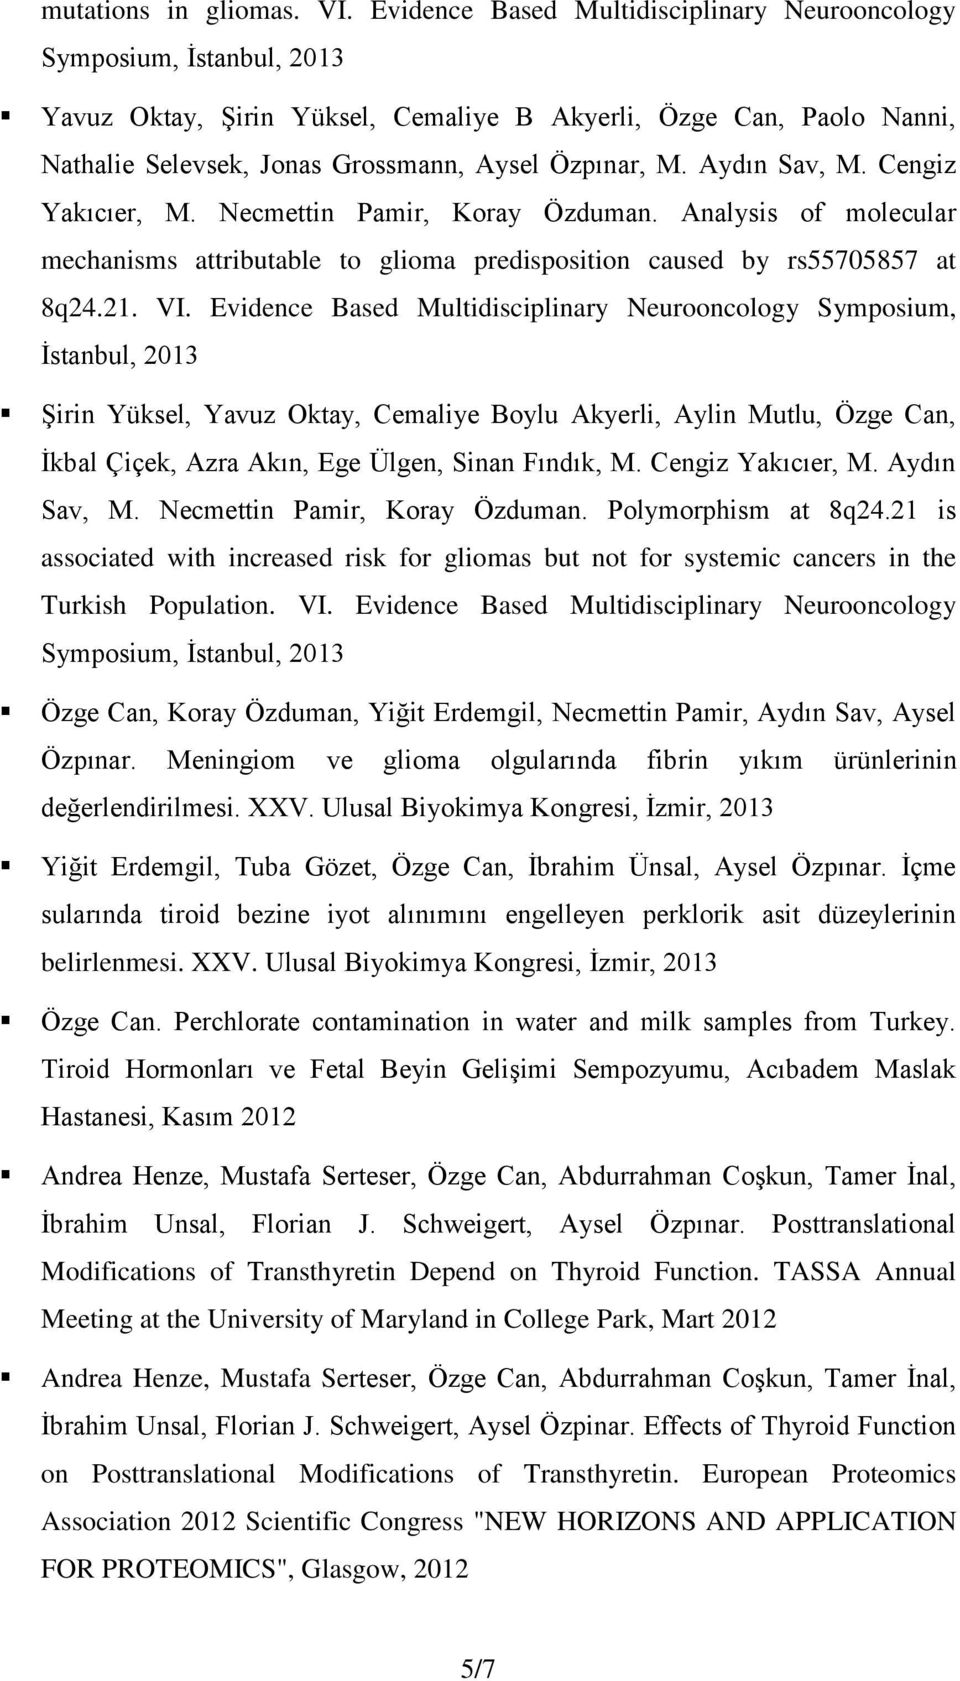 Aydın Sav, M. Cengiz Yakıcıer, M. Necmettin Pamir, Koray Özduman. Analysis of molecular mechanisms attributable to glioma predisposition caused by rs55705857 at 8q24.21. VI.